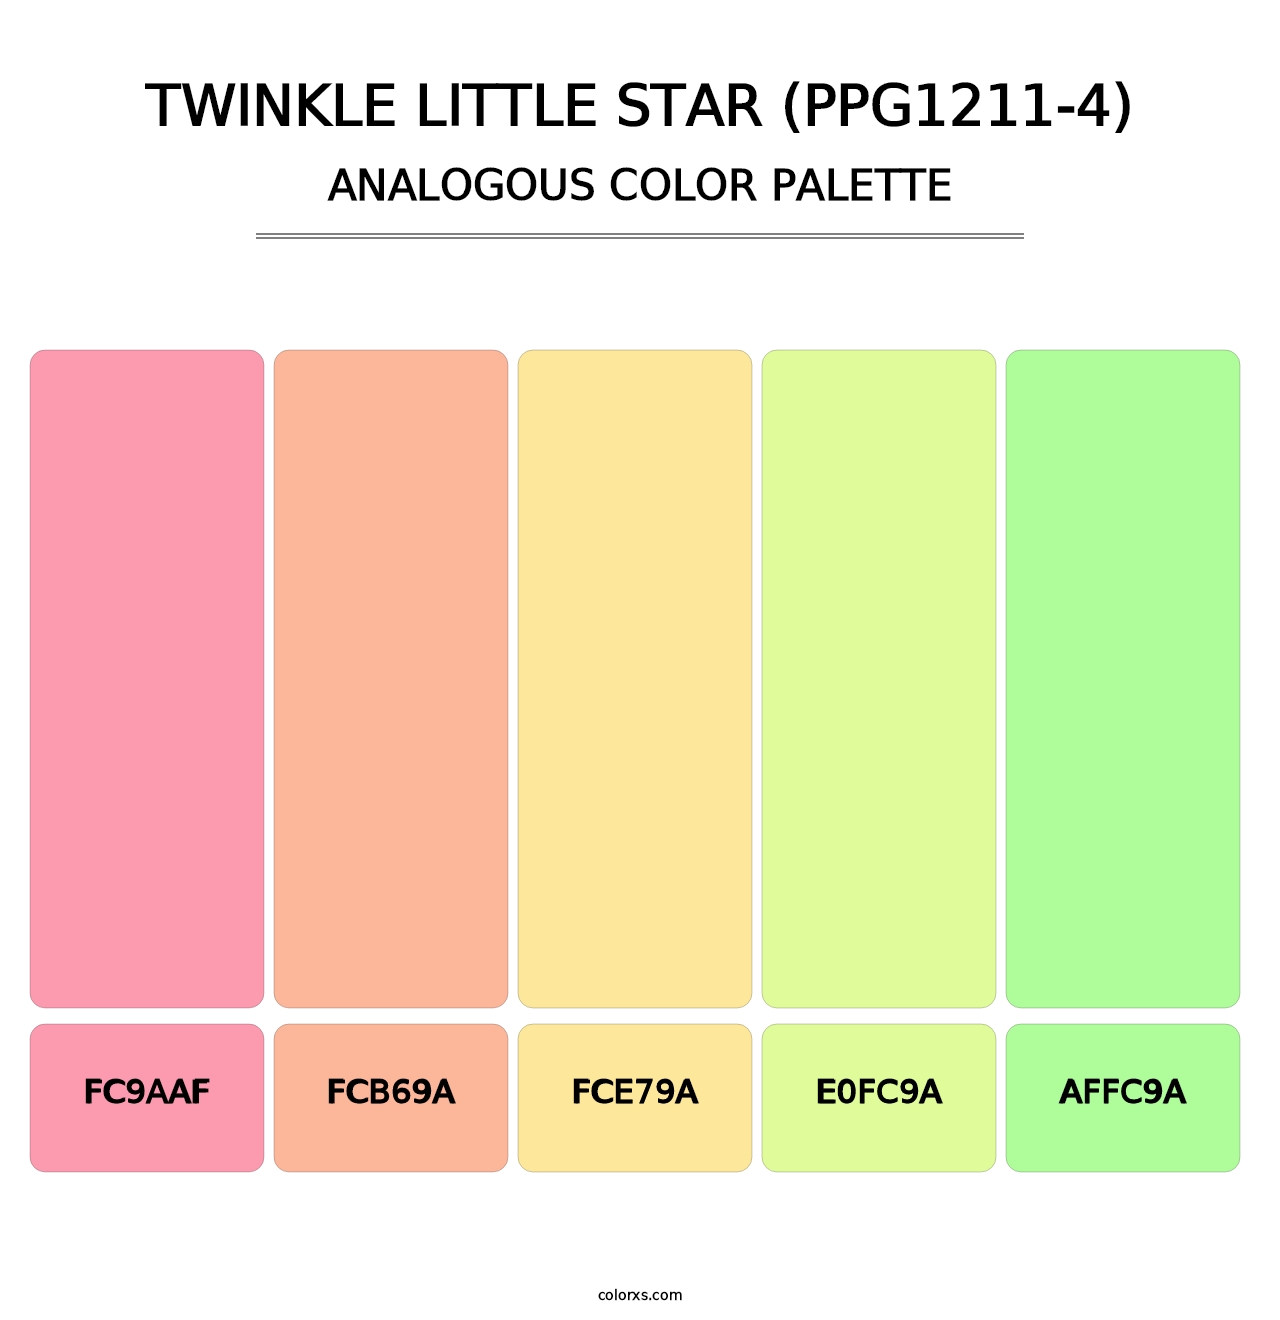 Twinkle Little Star (PPG1211-4) - Analogous Color Palette